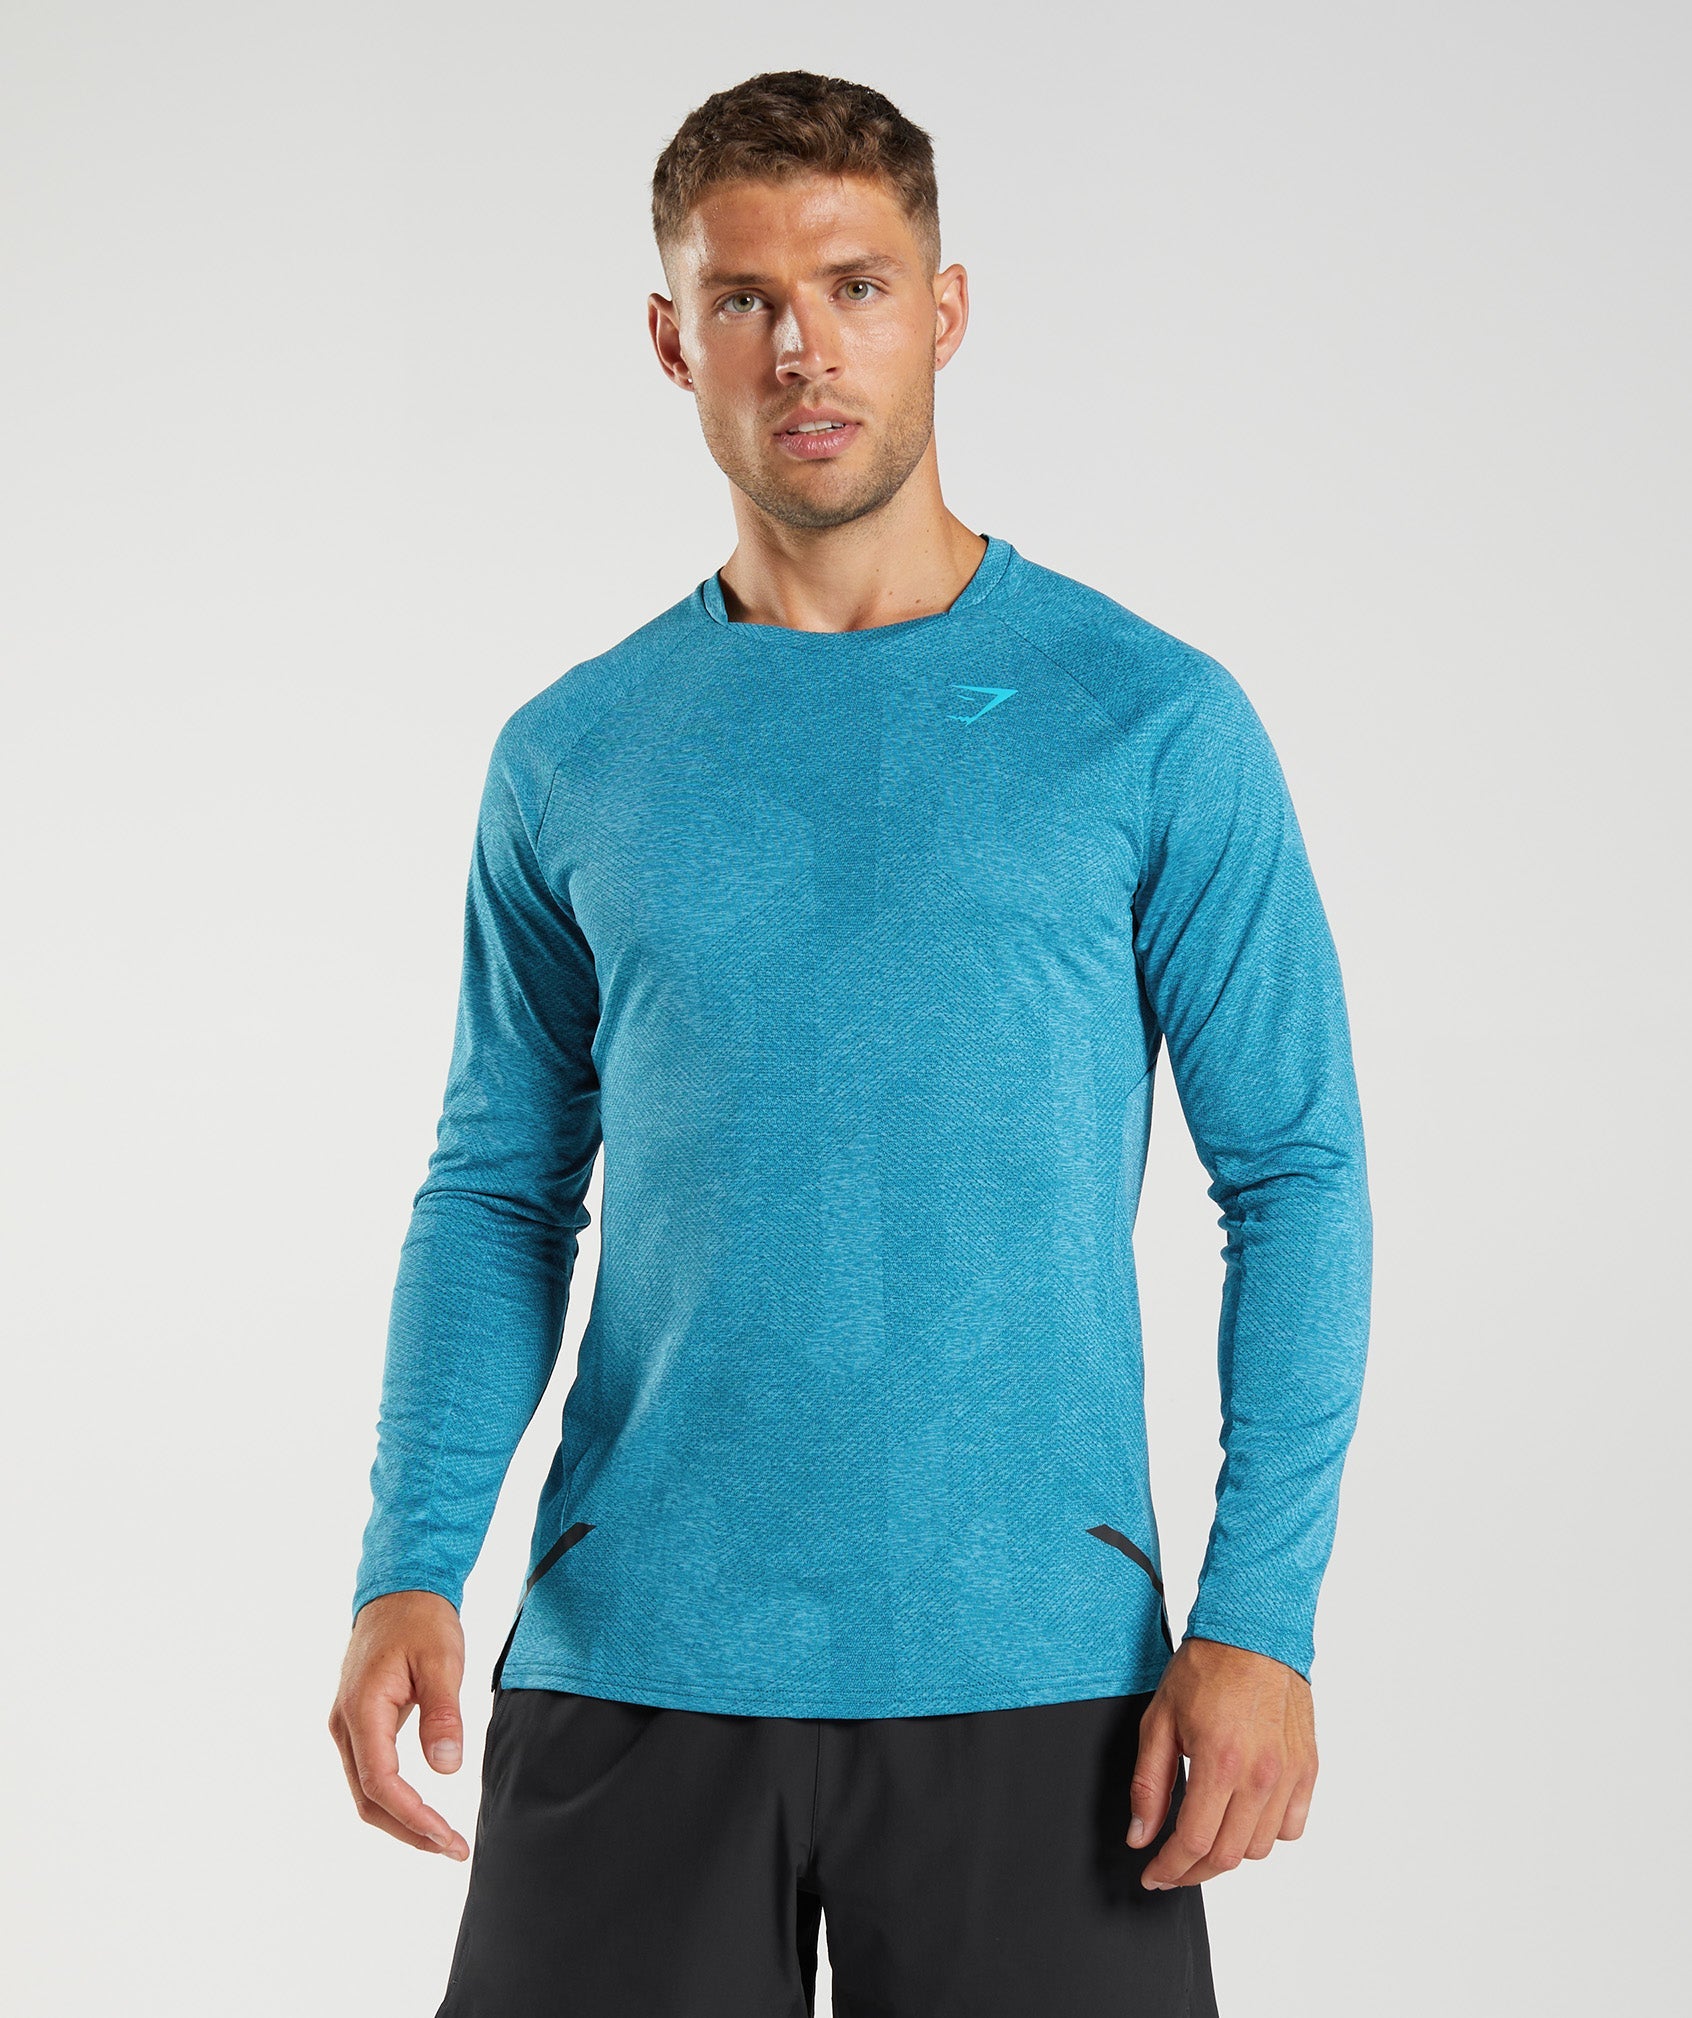 Nike Sportswear Men's Long-Sleeve T-Shirt Size Medium (Blue)